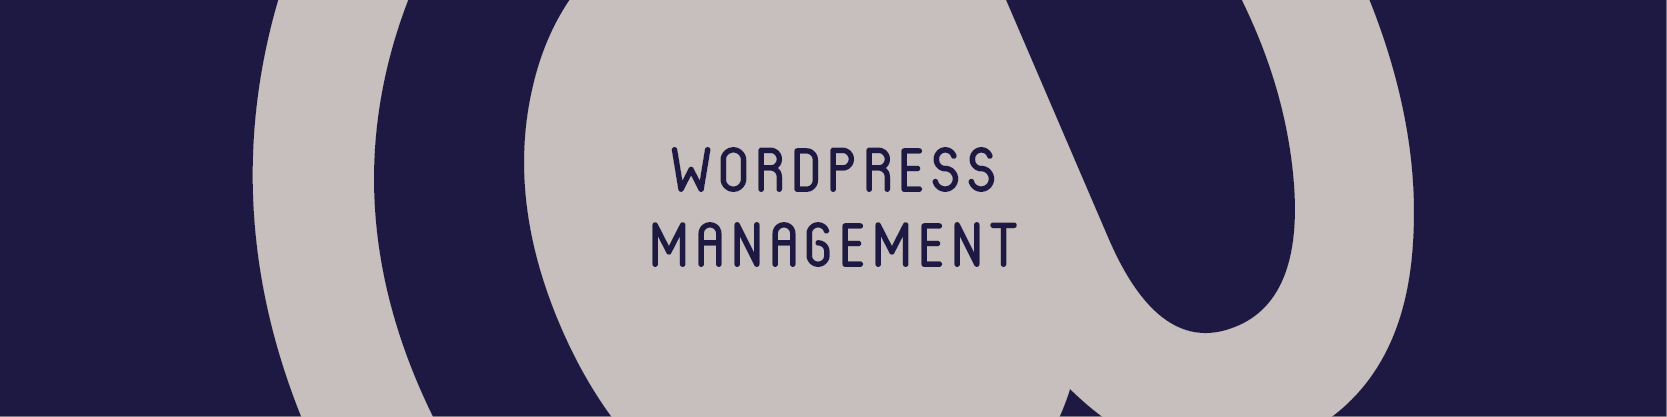 WordPress Management - Allera Marketing